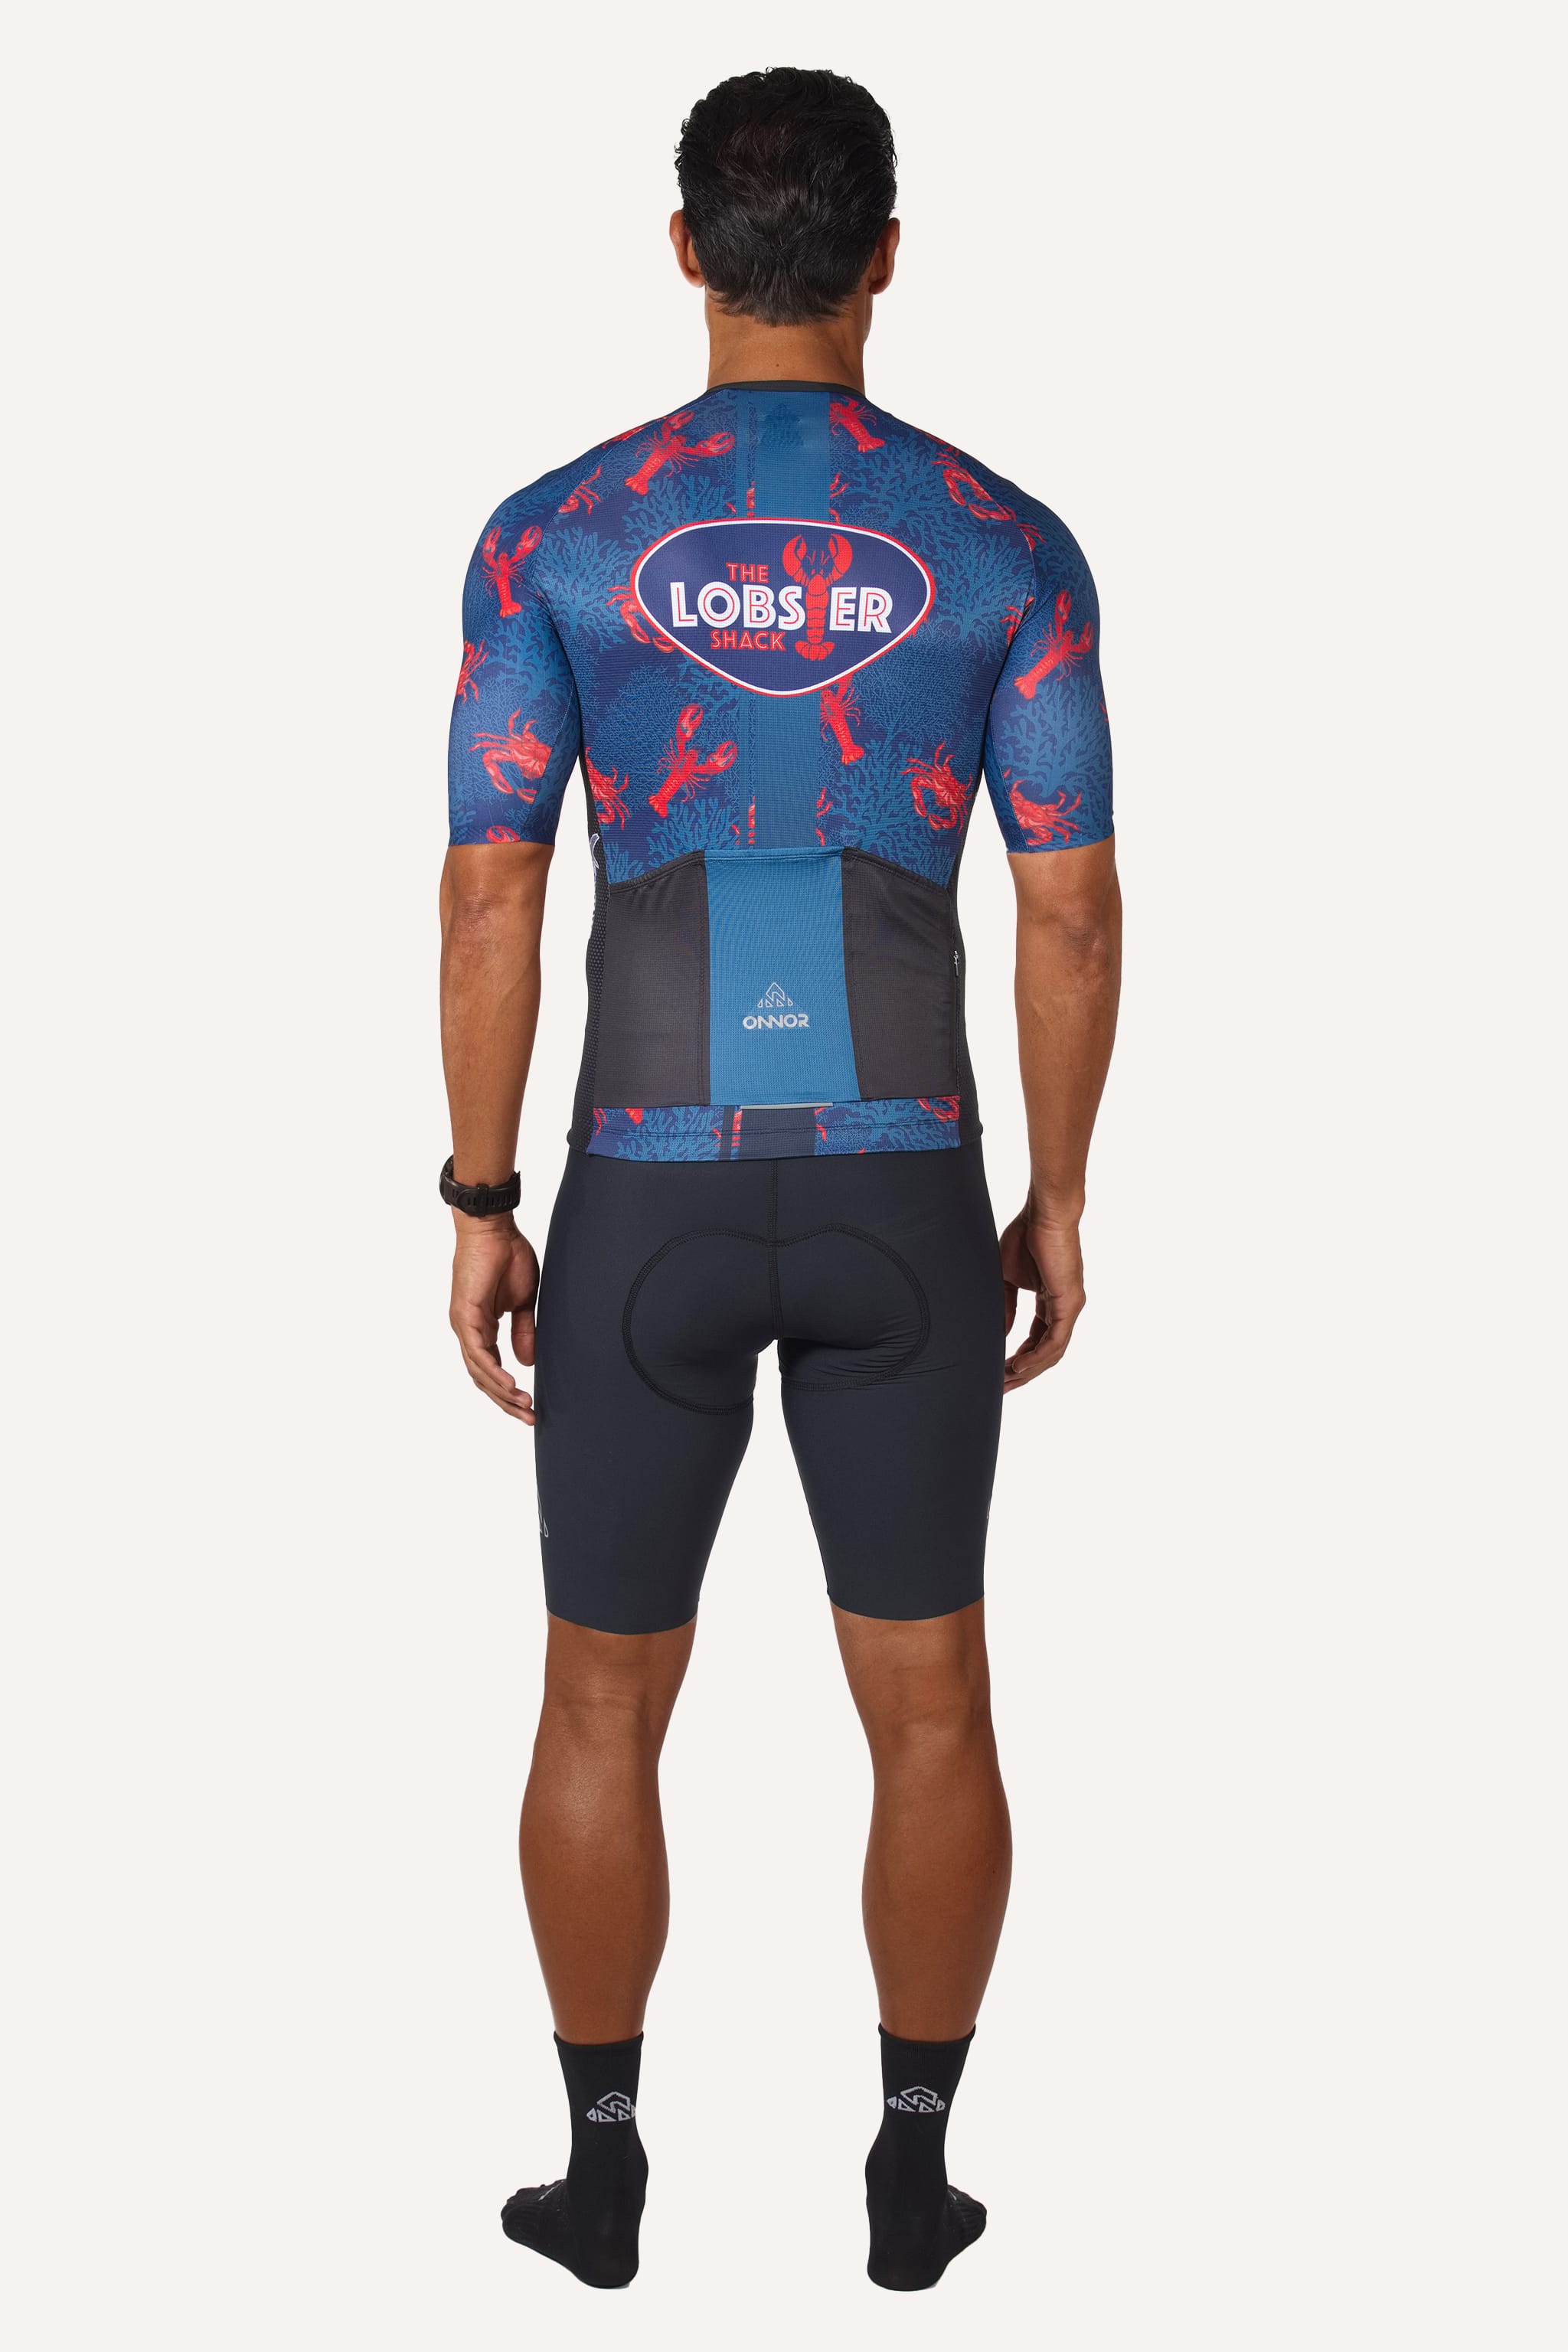 High-Quality Custom Cycling Jerseys in Miami